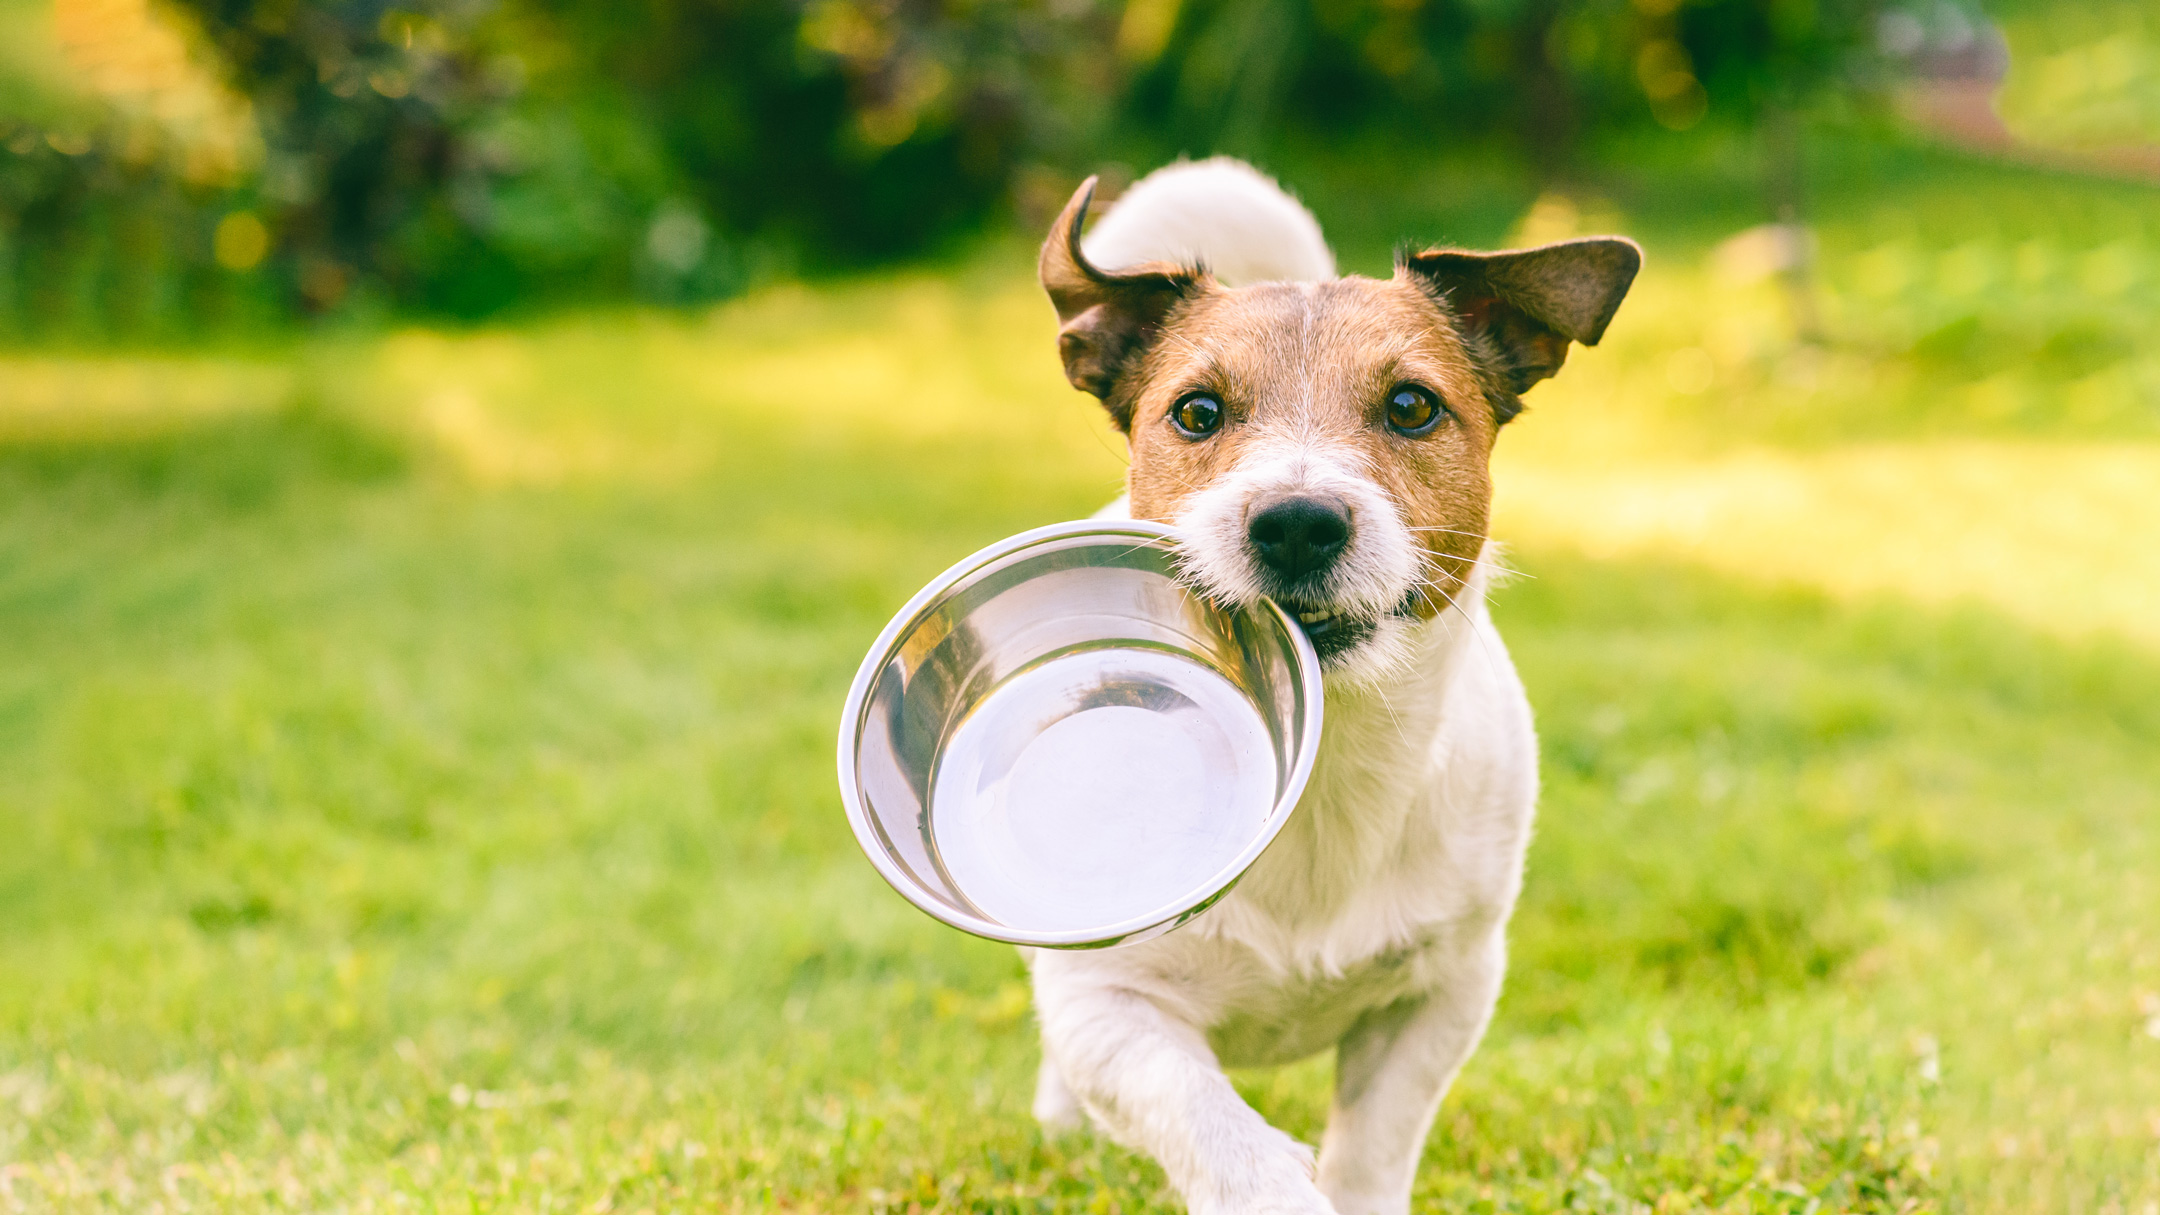 Dog run with food bowl TEASER